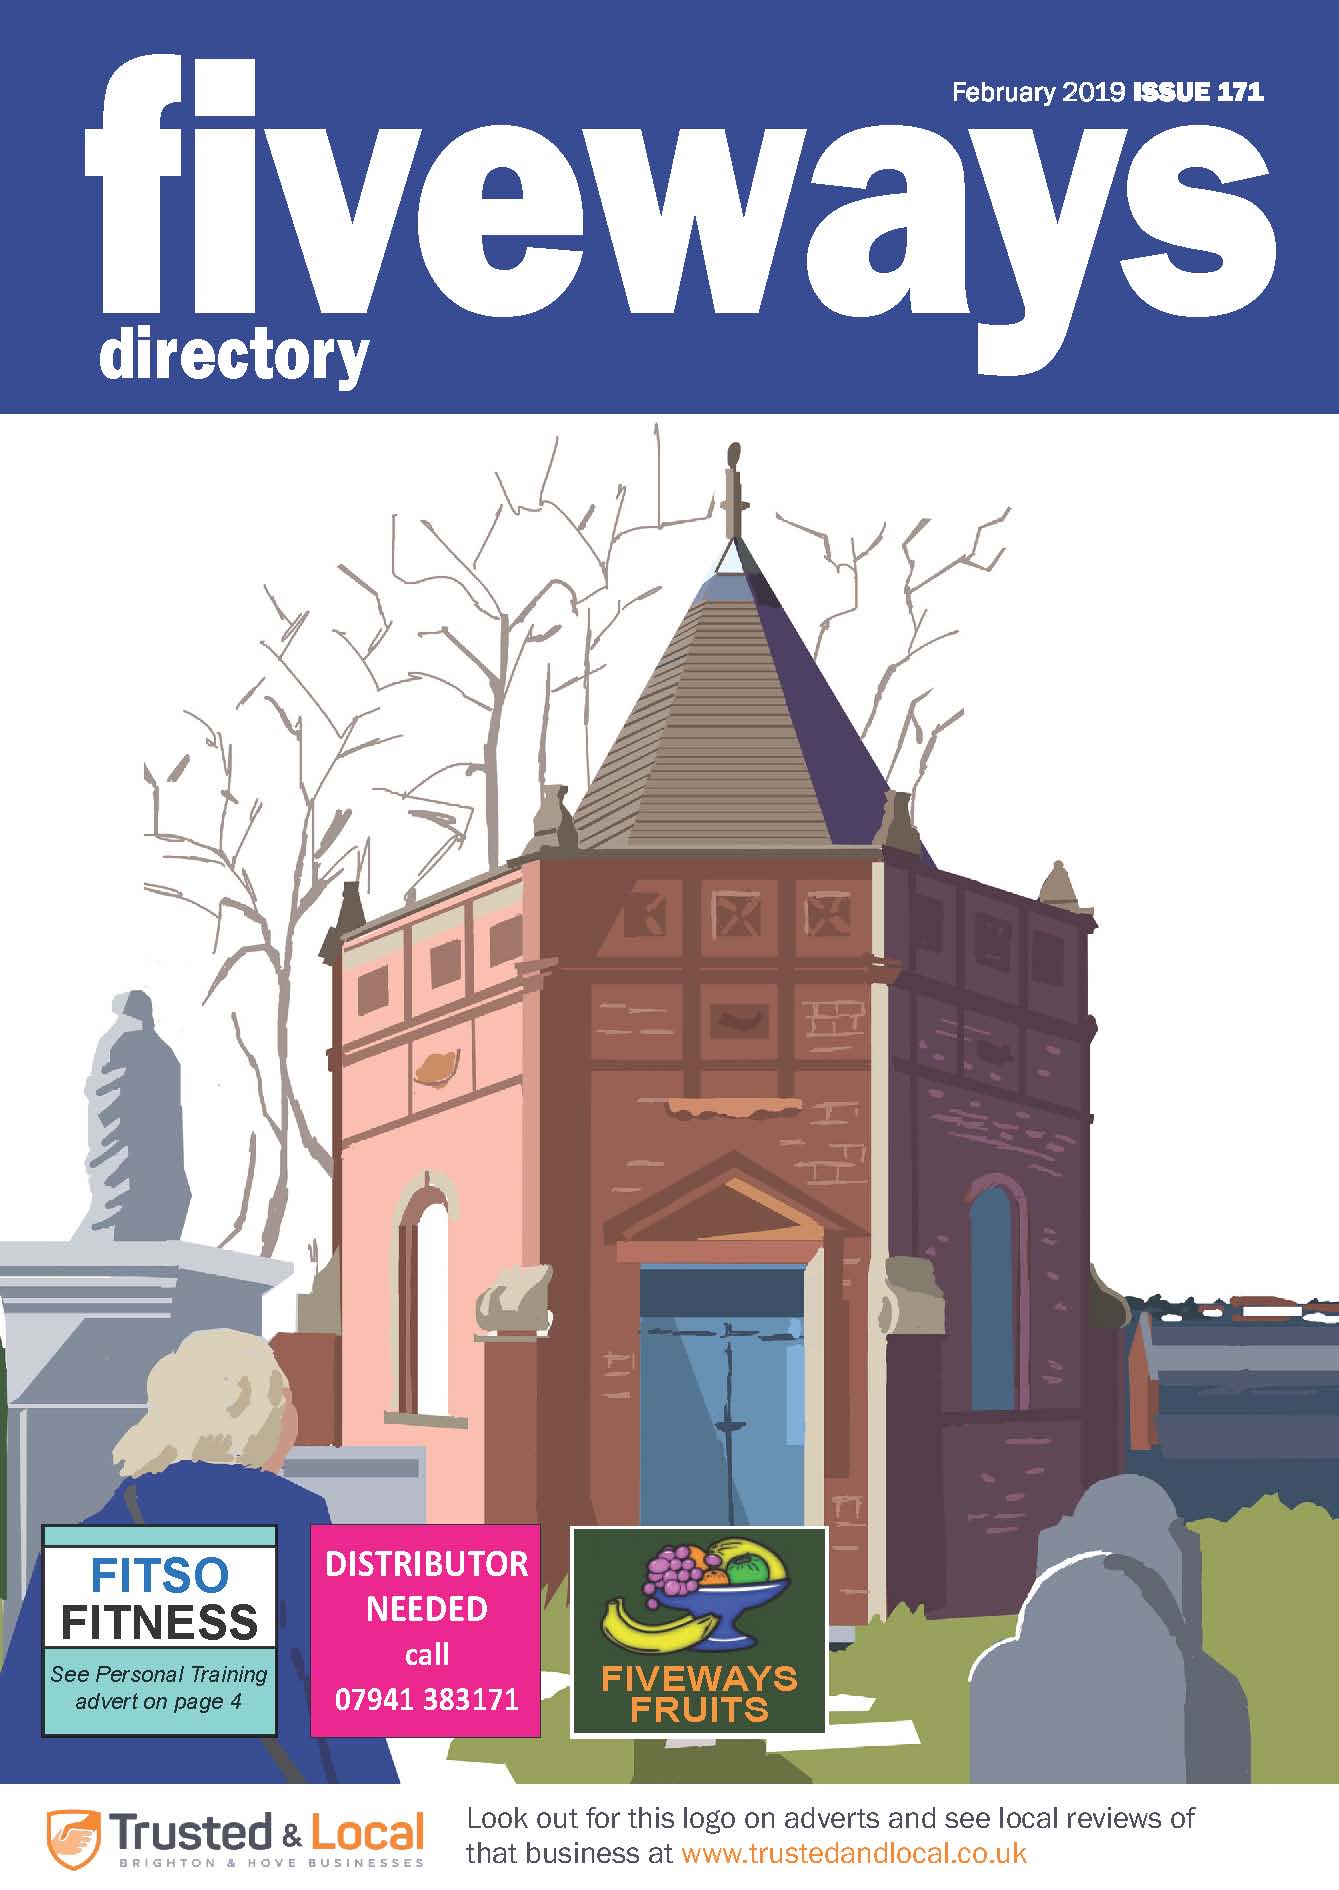 Fiveways Directory